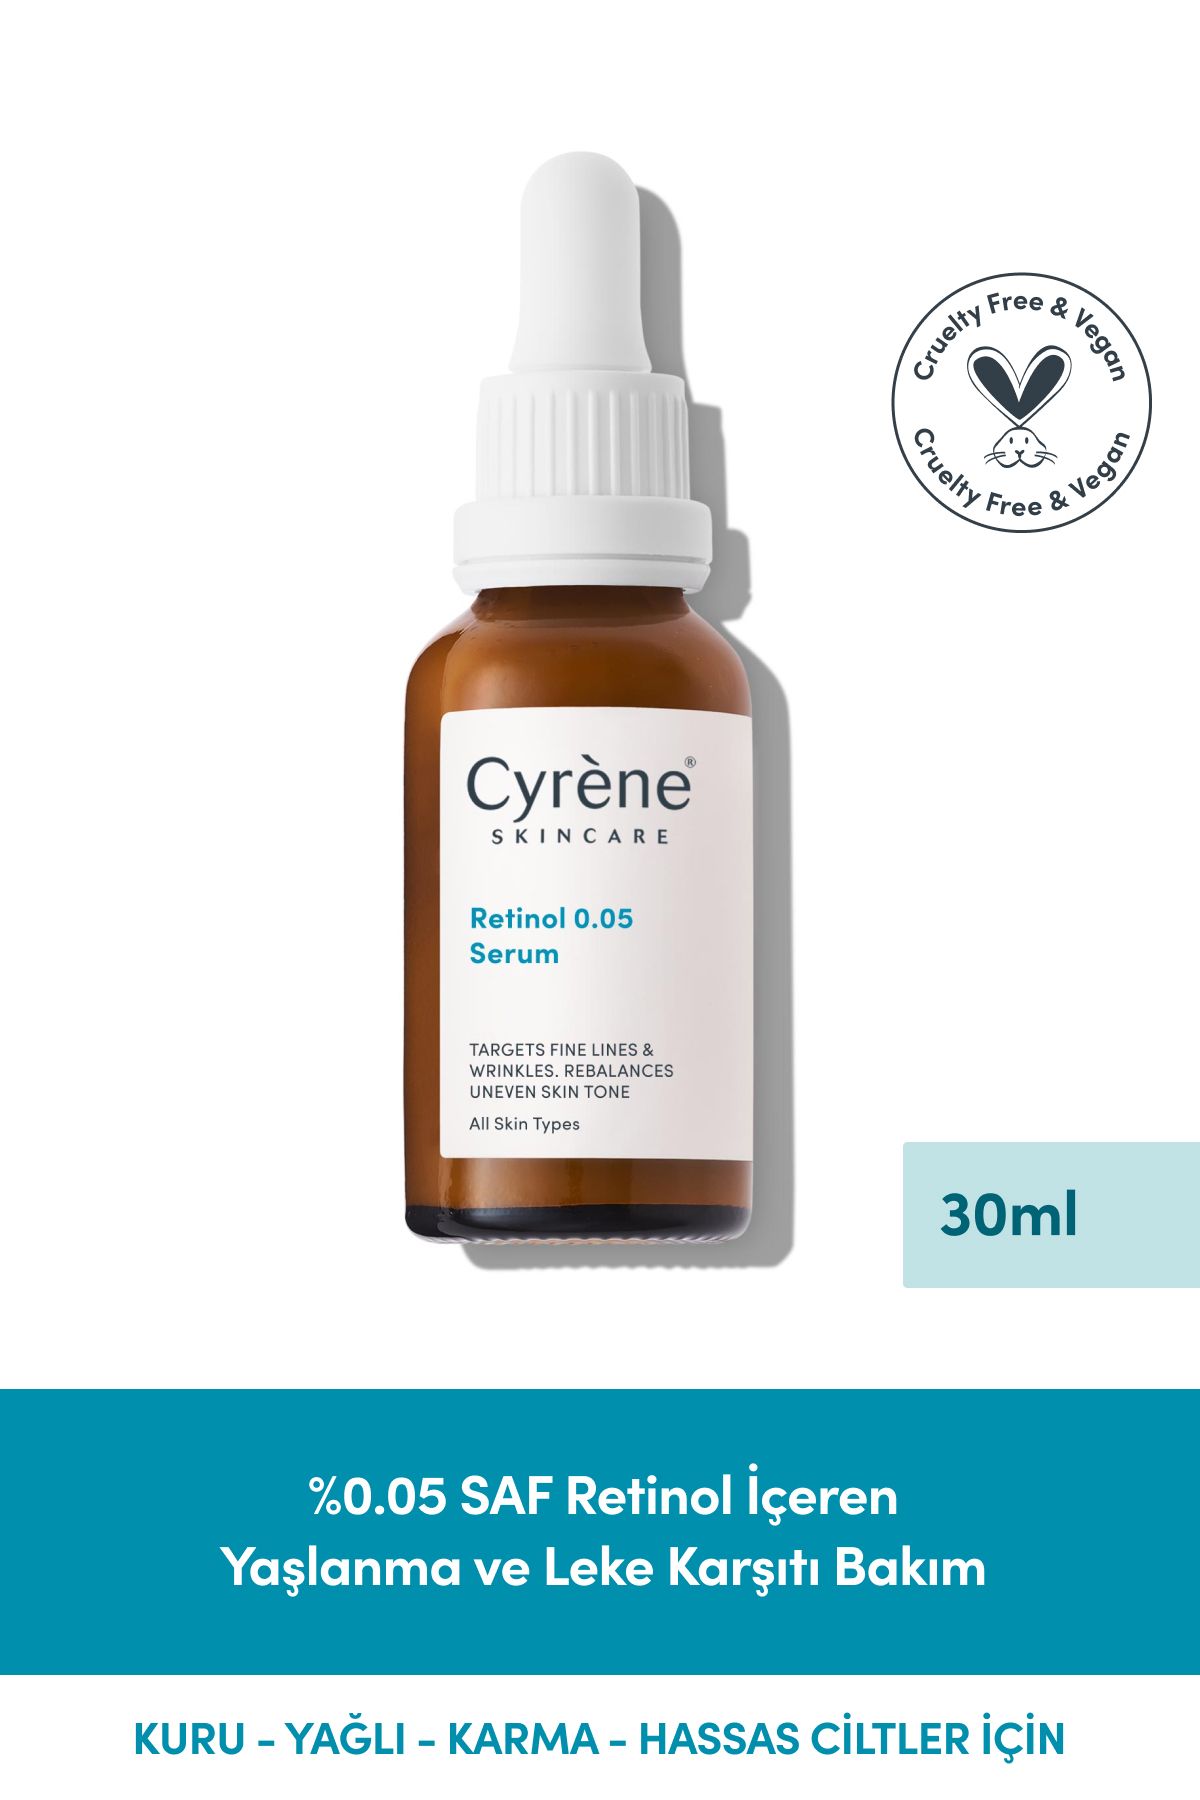 Cyrene Retical Retinol 0.05 Serum